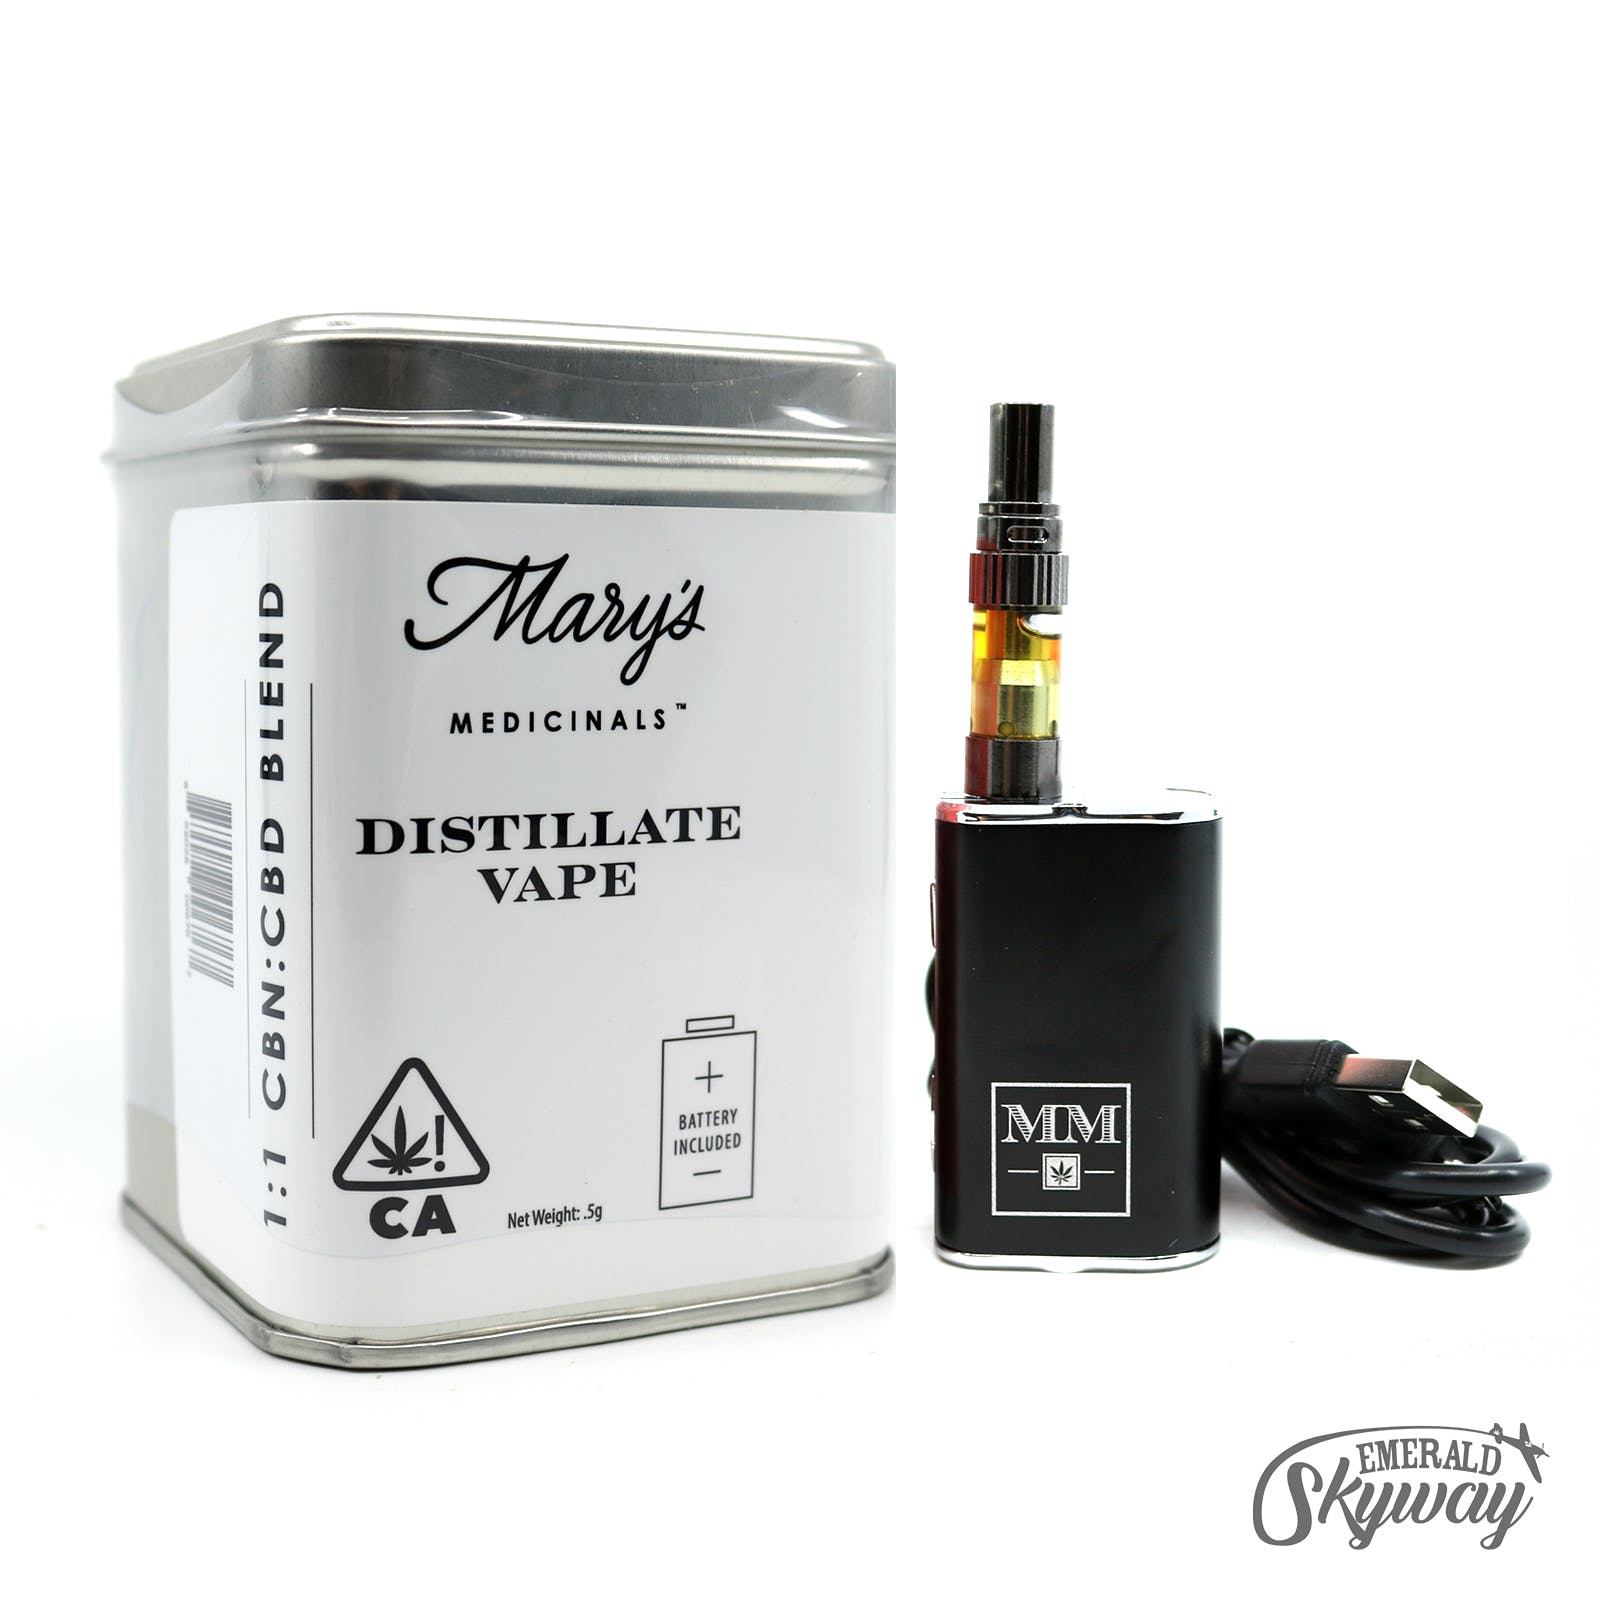 Mary's Medicinals: Distillate Vape Kit - 1:1 CBN:CBD Blend